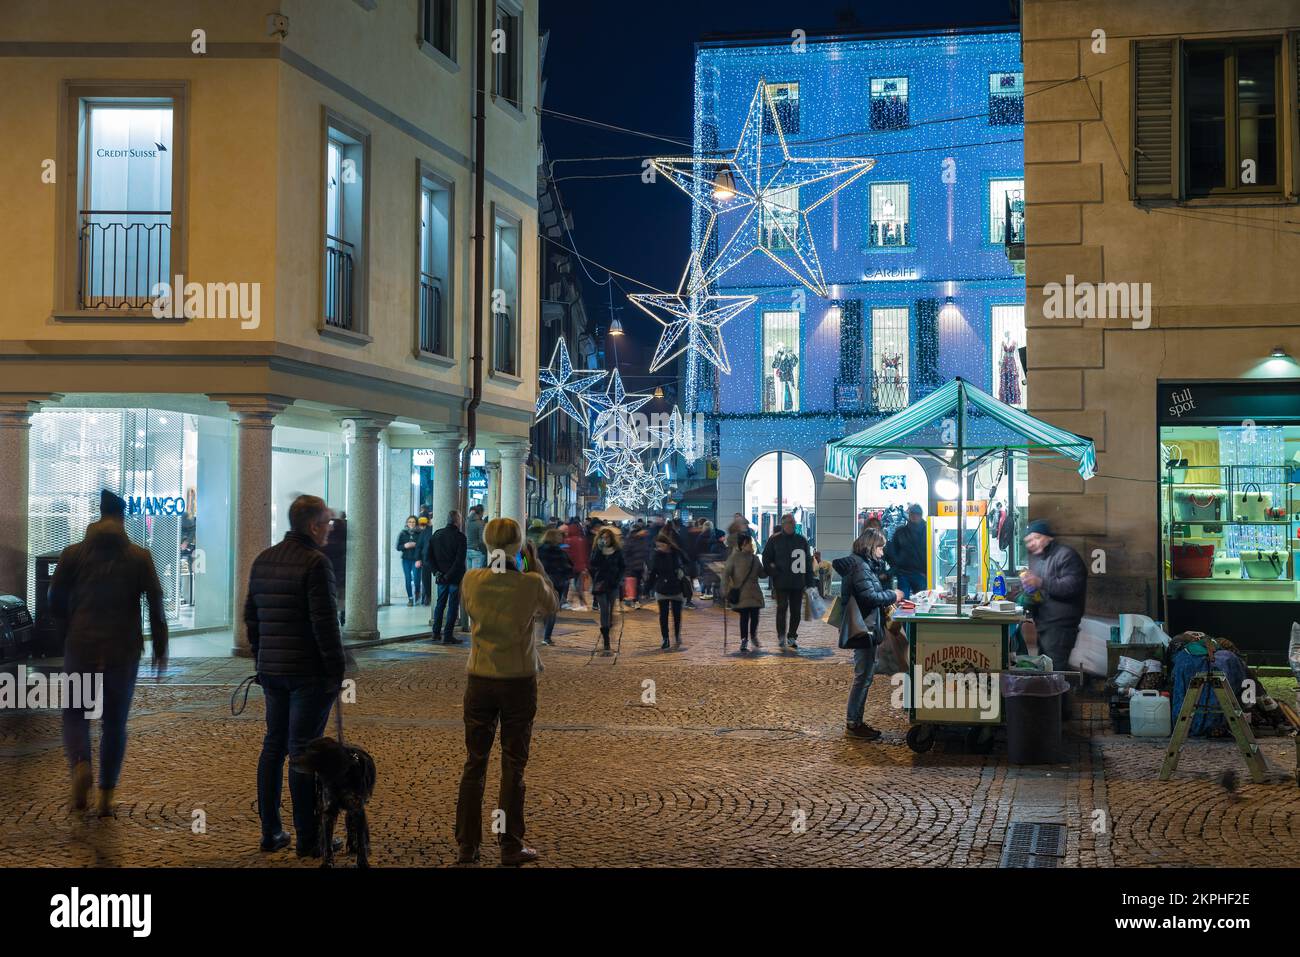 Street at night illuminated with Christmas decorations, Varese, Italy Stock Photo